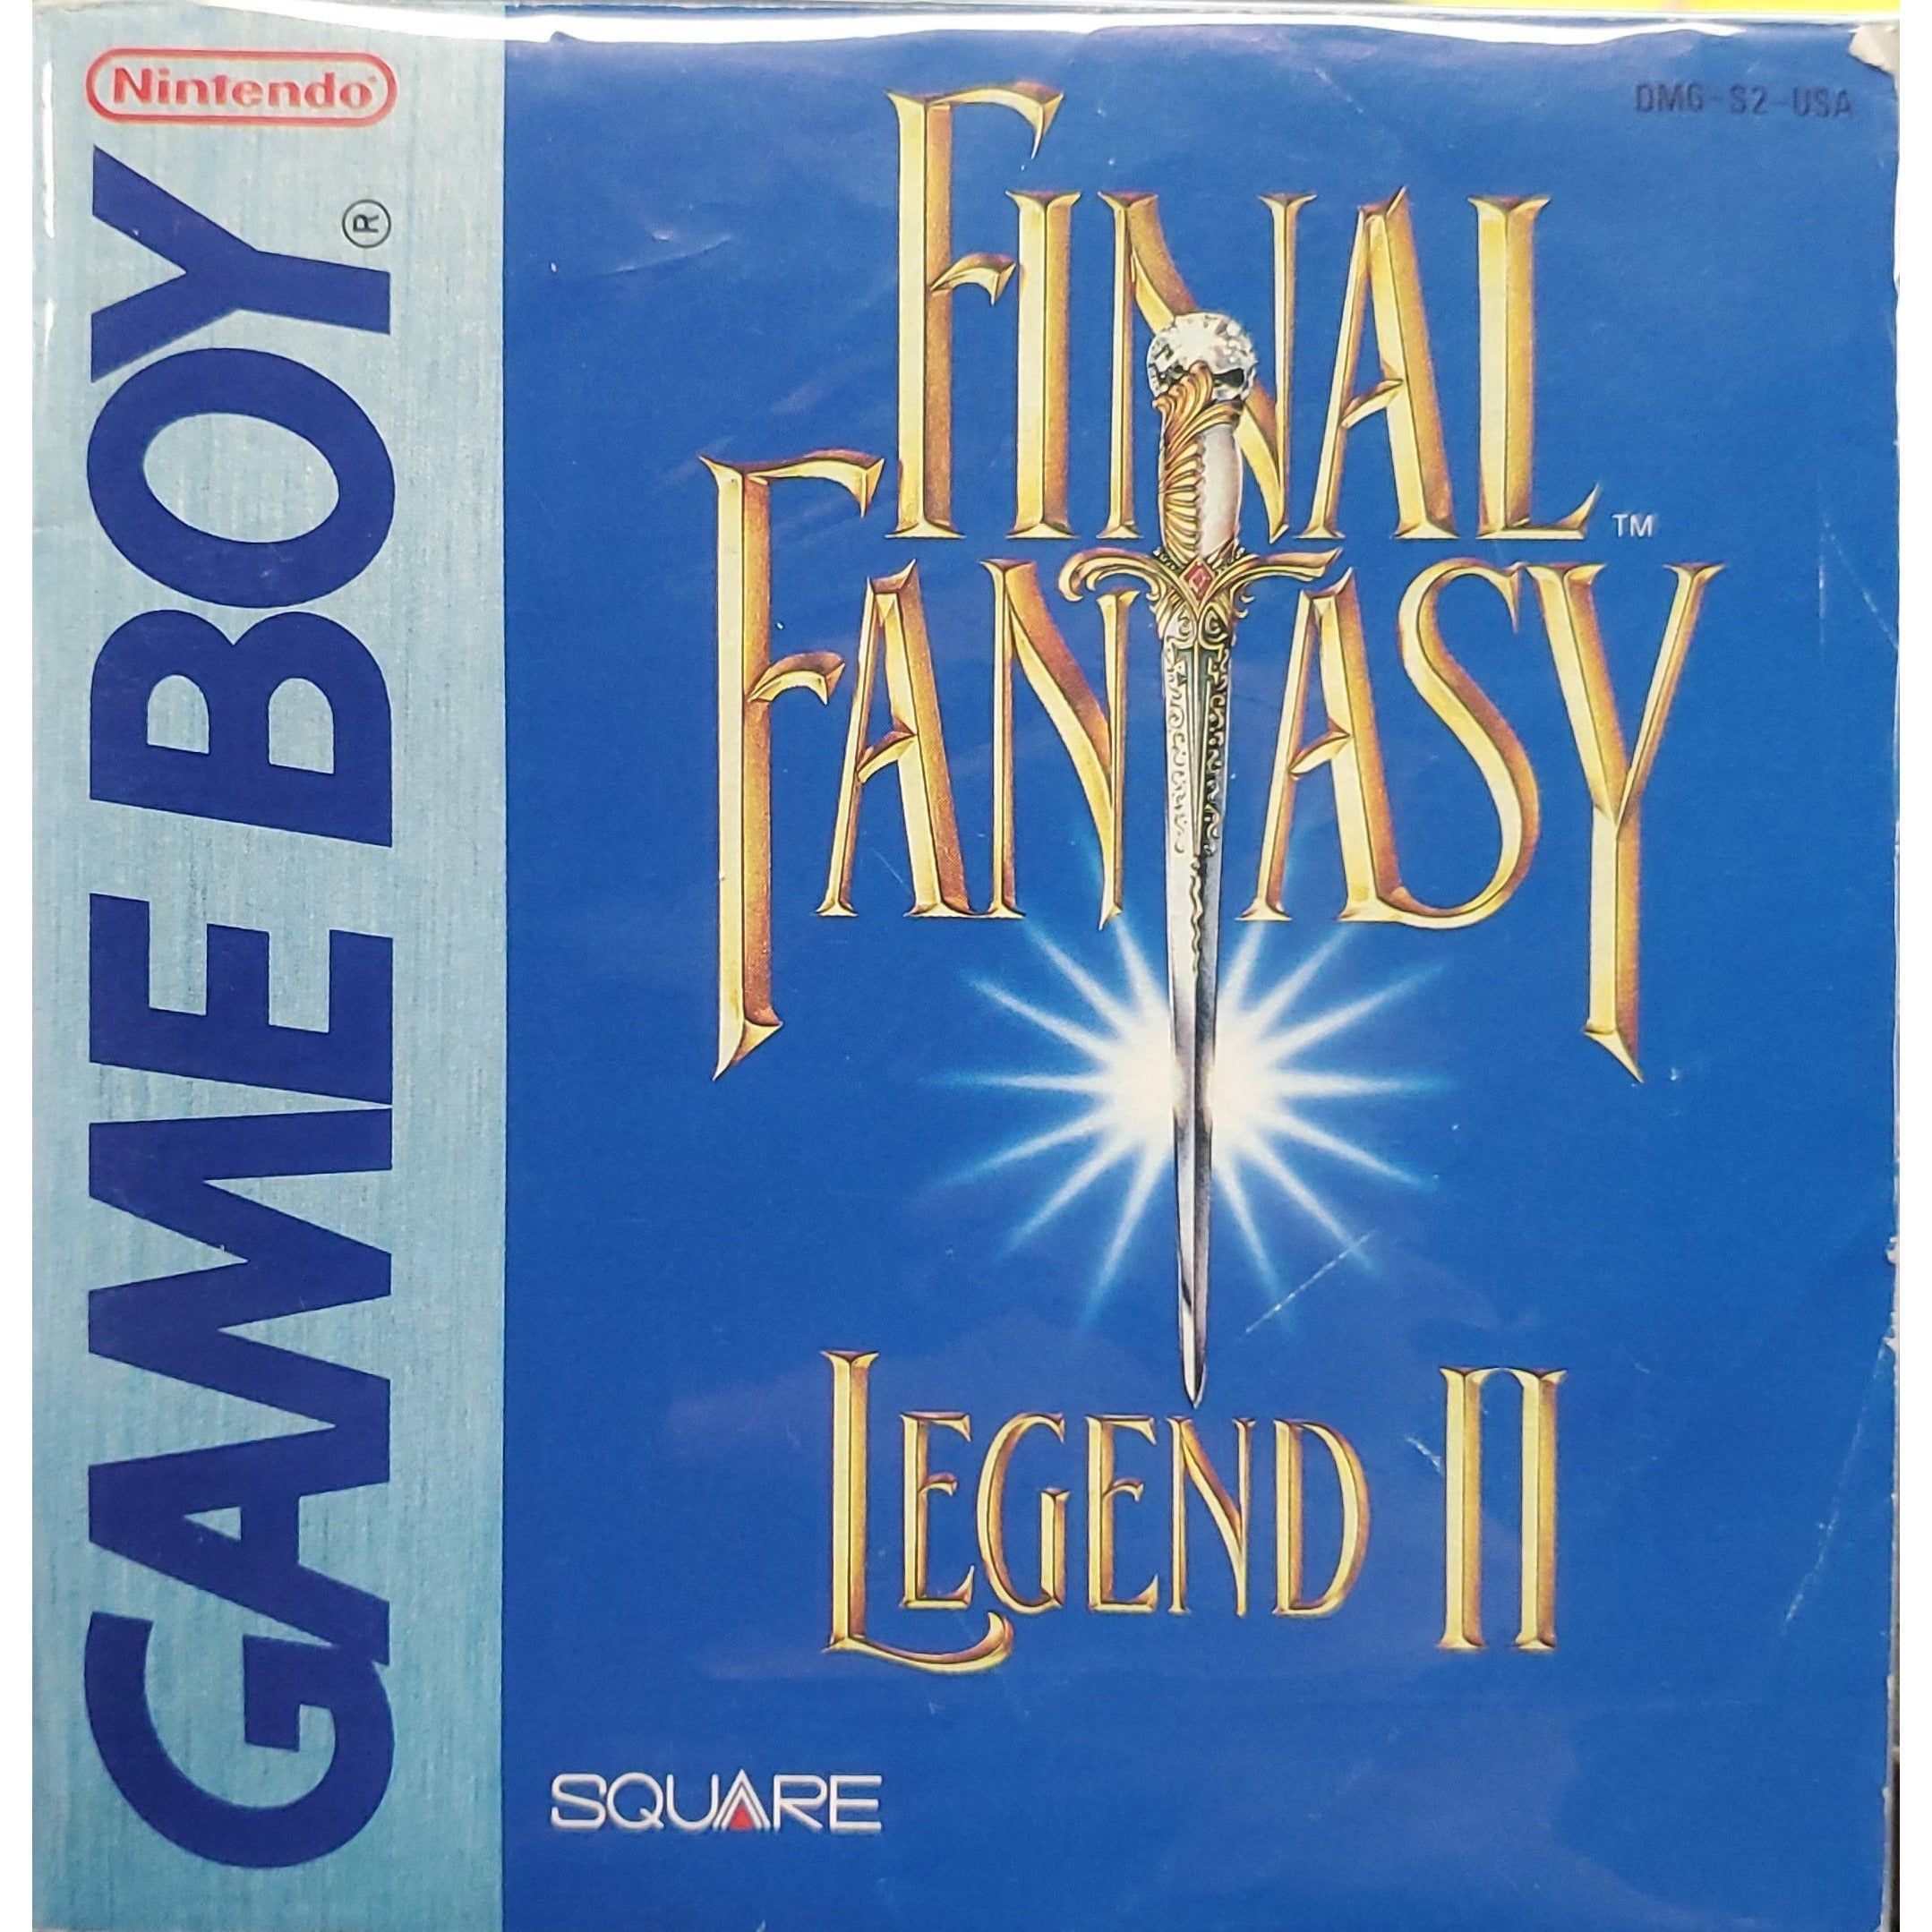 GB - Final Fantasy Legend II (Manual)